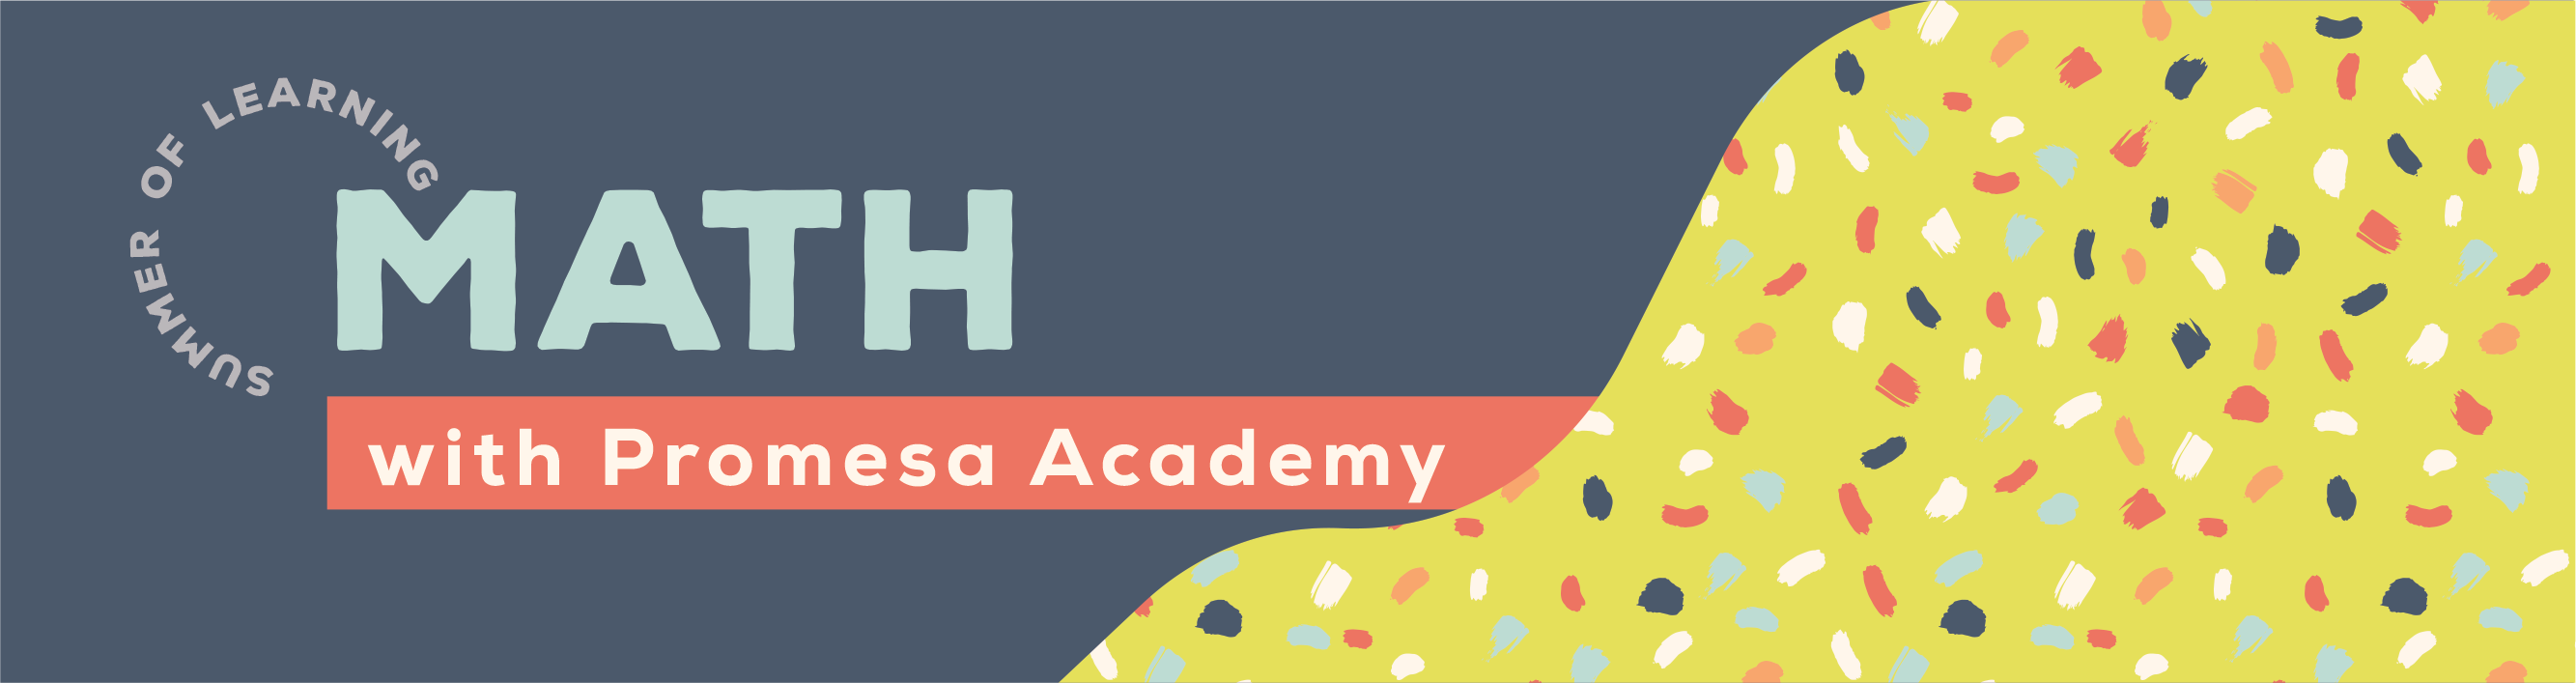 math games promesa academy ambika dani